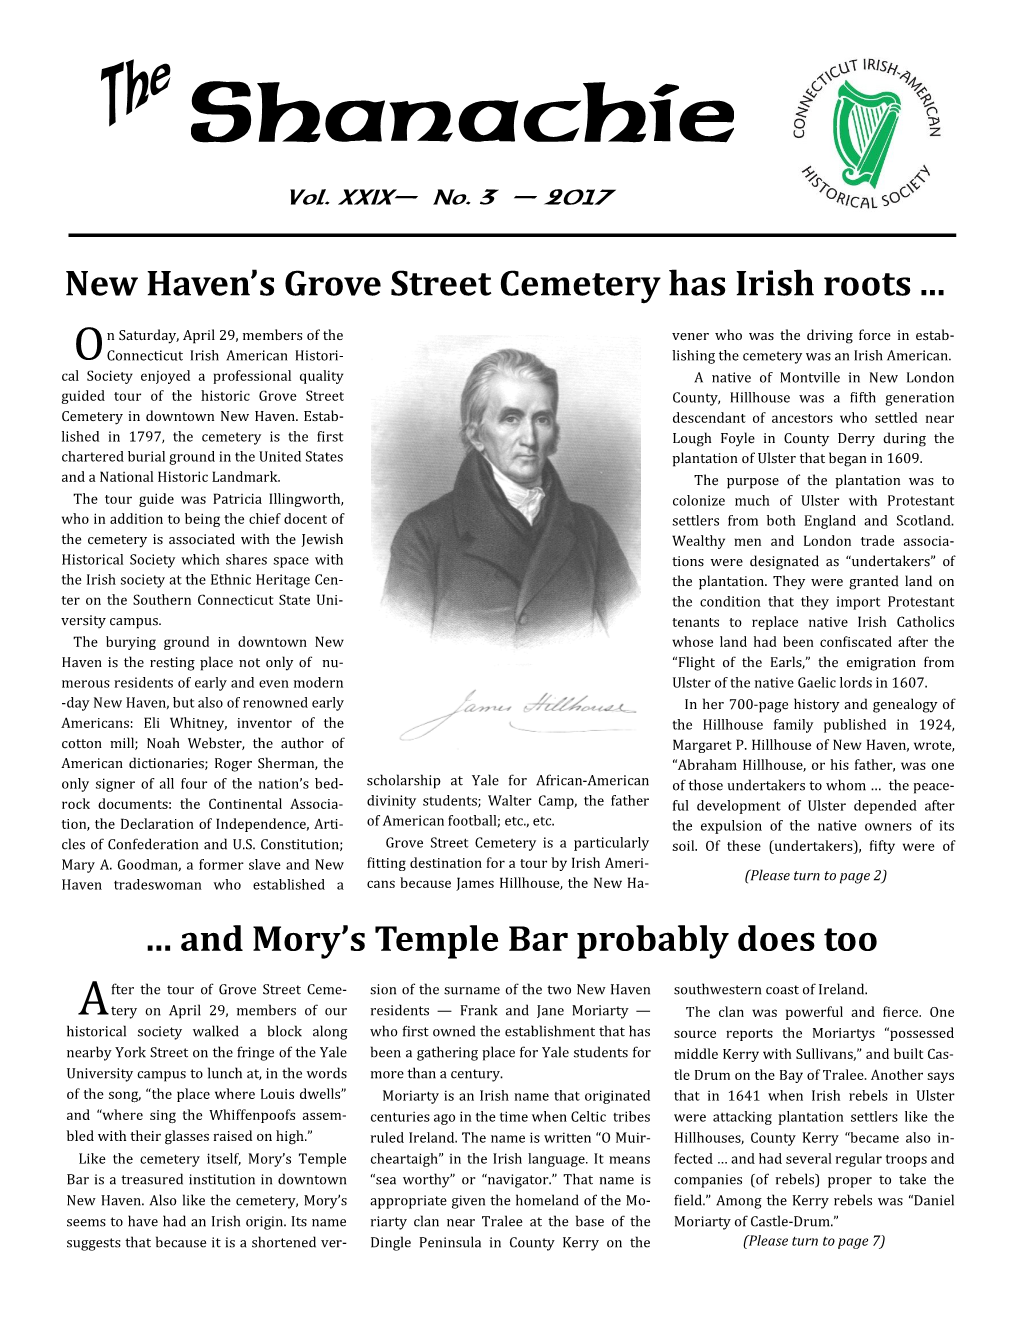 New Haven's Grove Street Cemetery Has Irish Roots